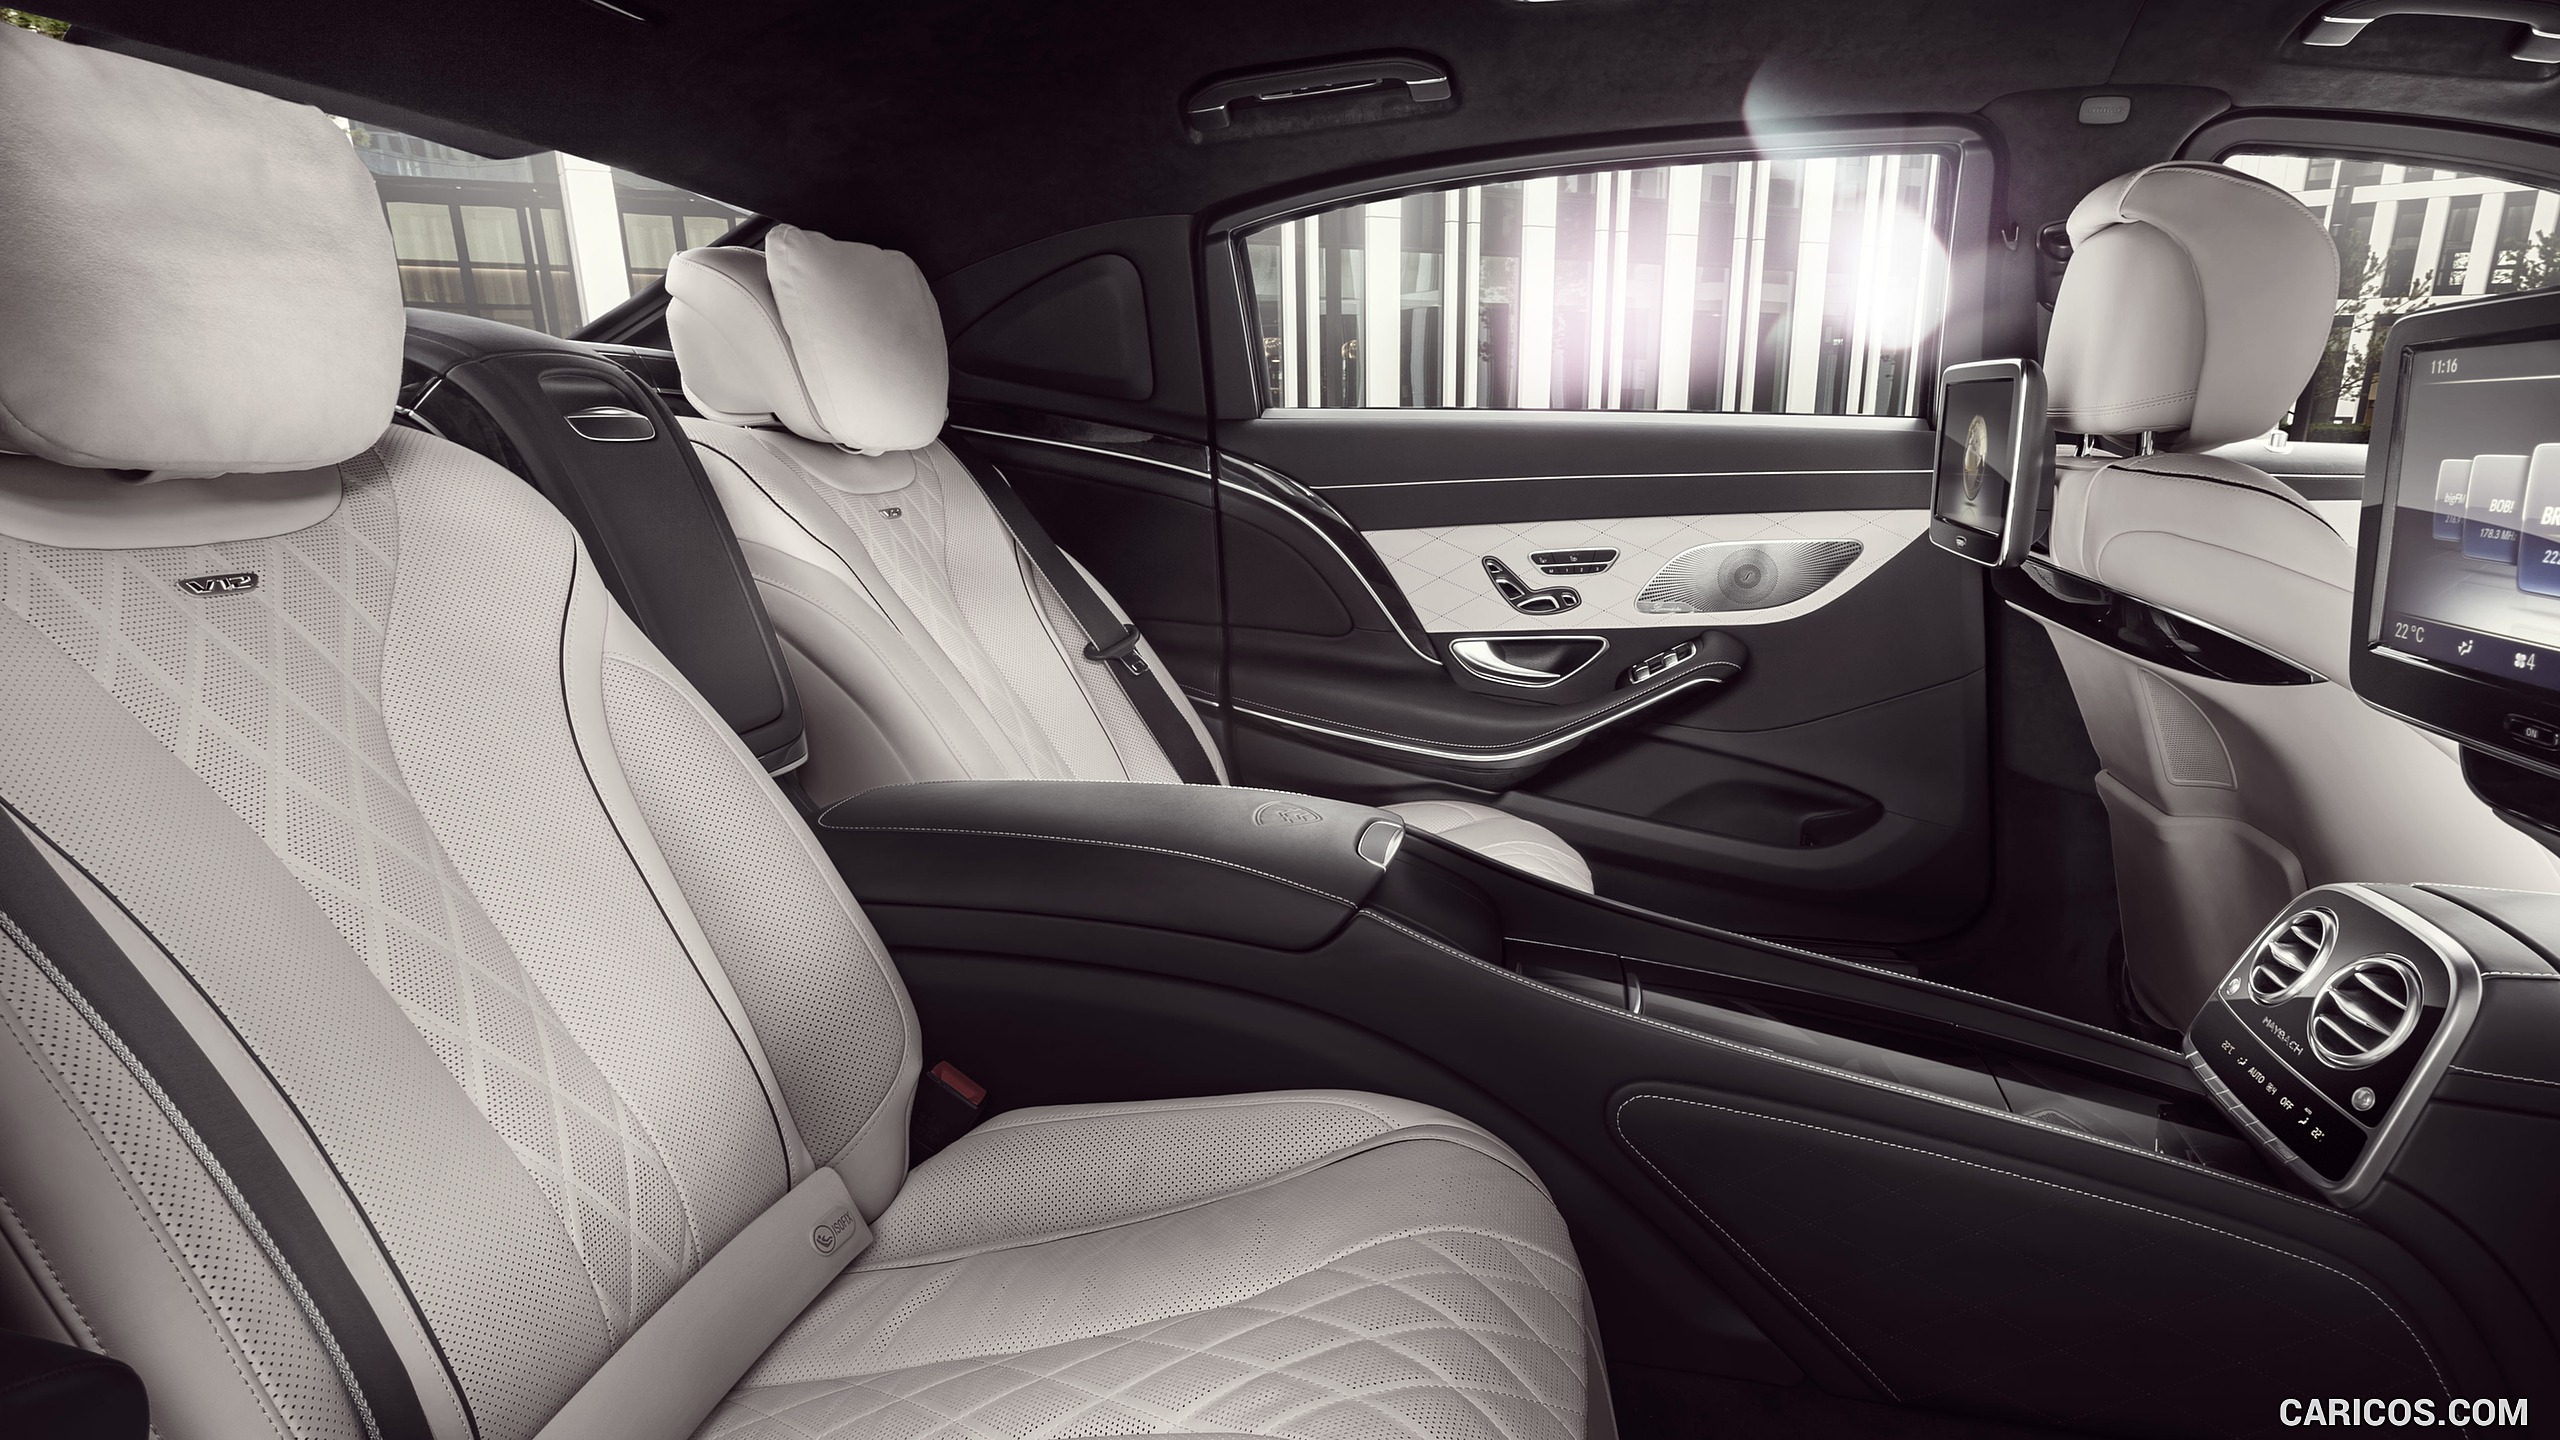 2016 Mercedes-Maybach S600 Guard - Interior, Rear Seats, #10 of 13